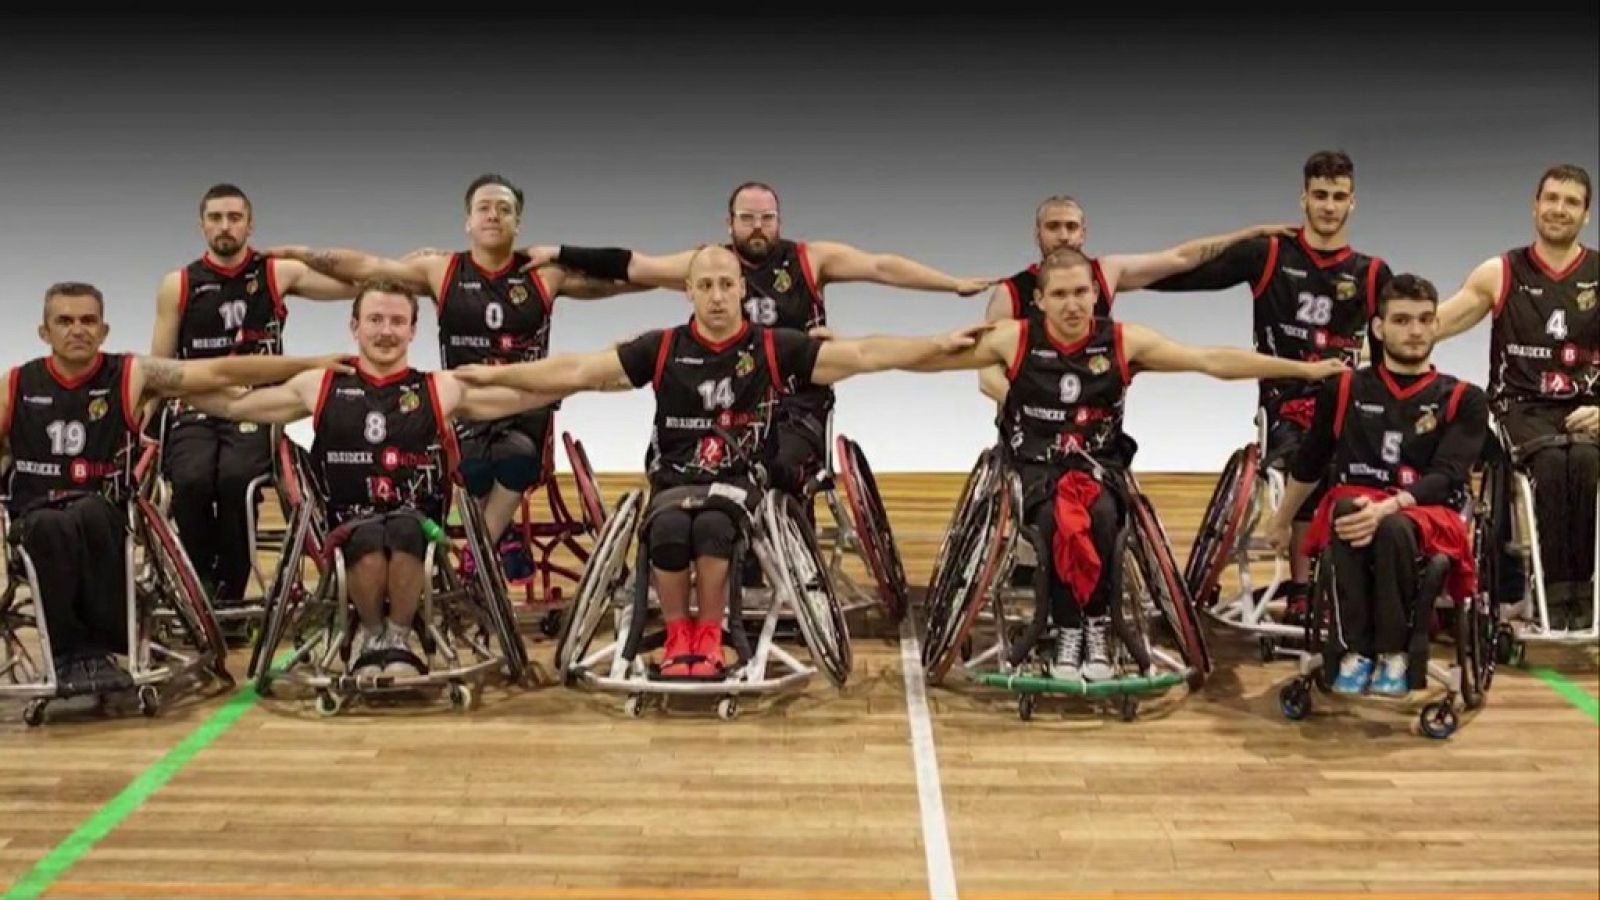 Baloncesto en silla de ruedas: Baloncesto en Silla de Ruedas - Presentación Liga Nacional 2018/19 | RTVE Play